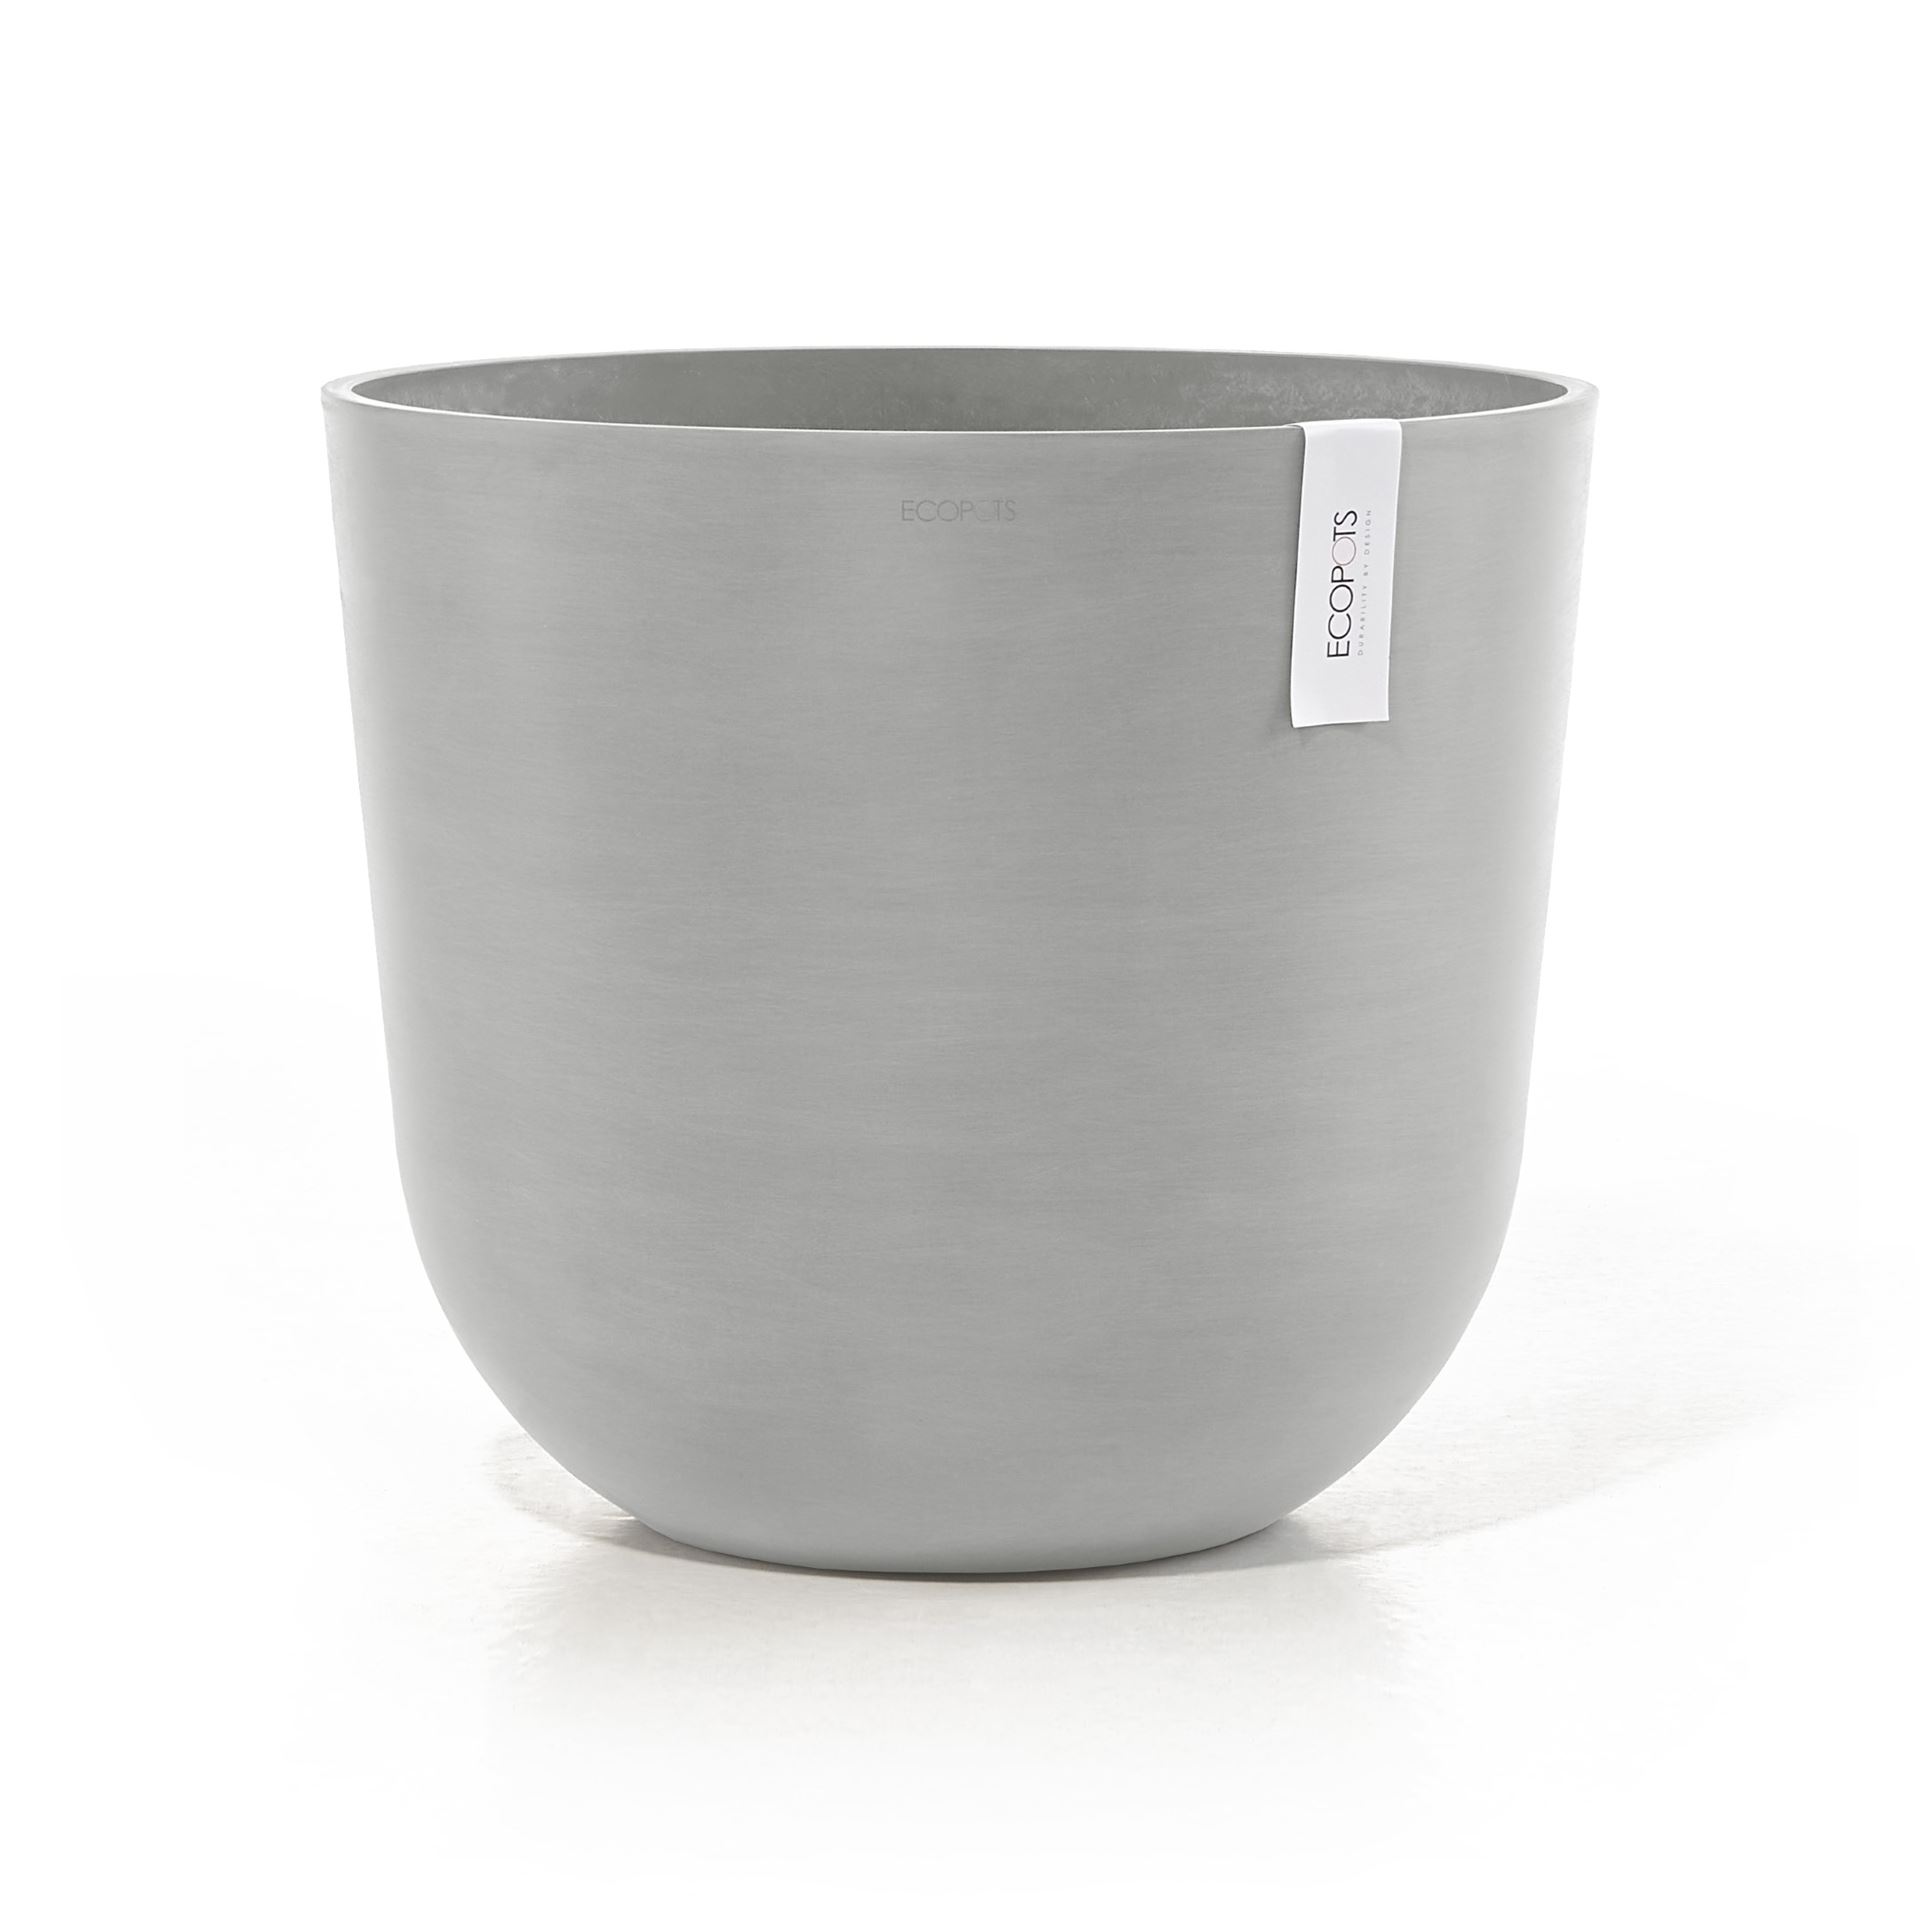 Ecopots-oslo-white-grey-45-cm-H39-2-cm-incl-waterreservoir